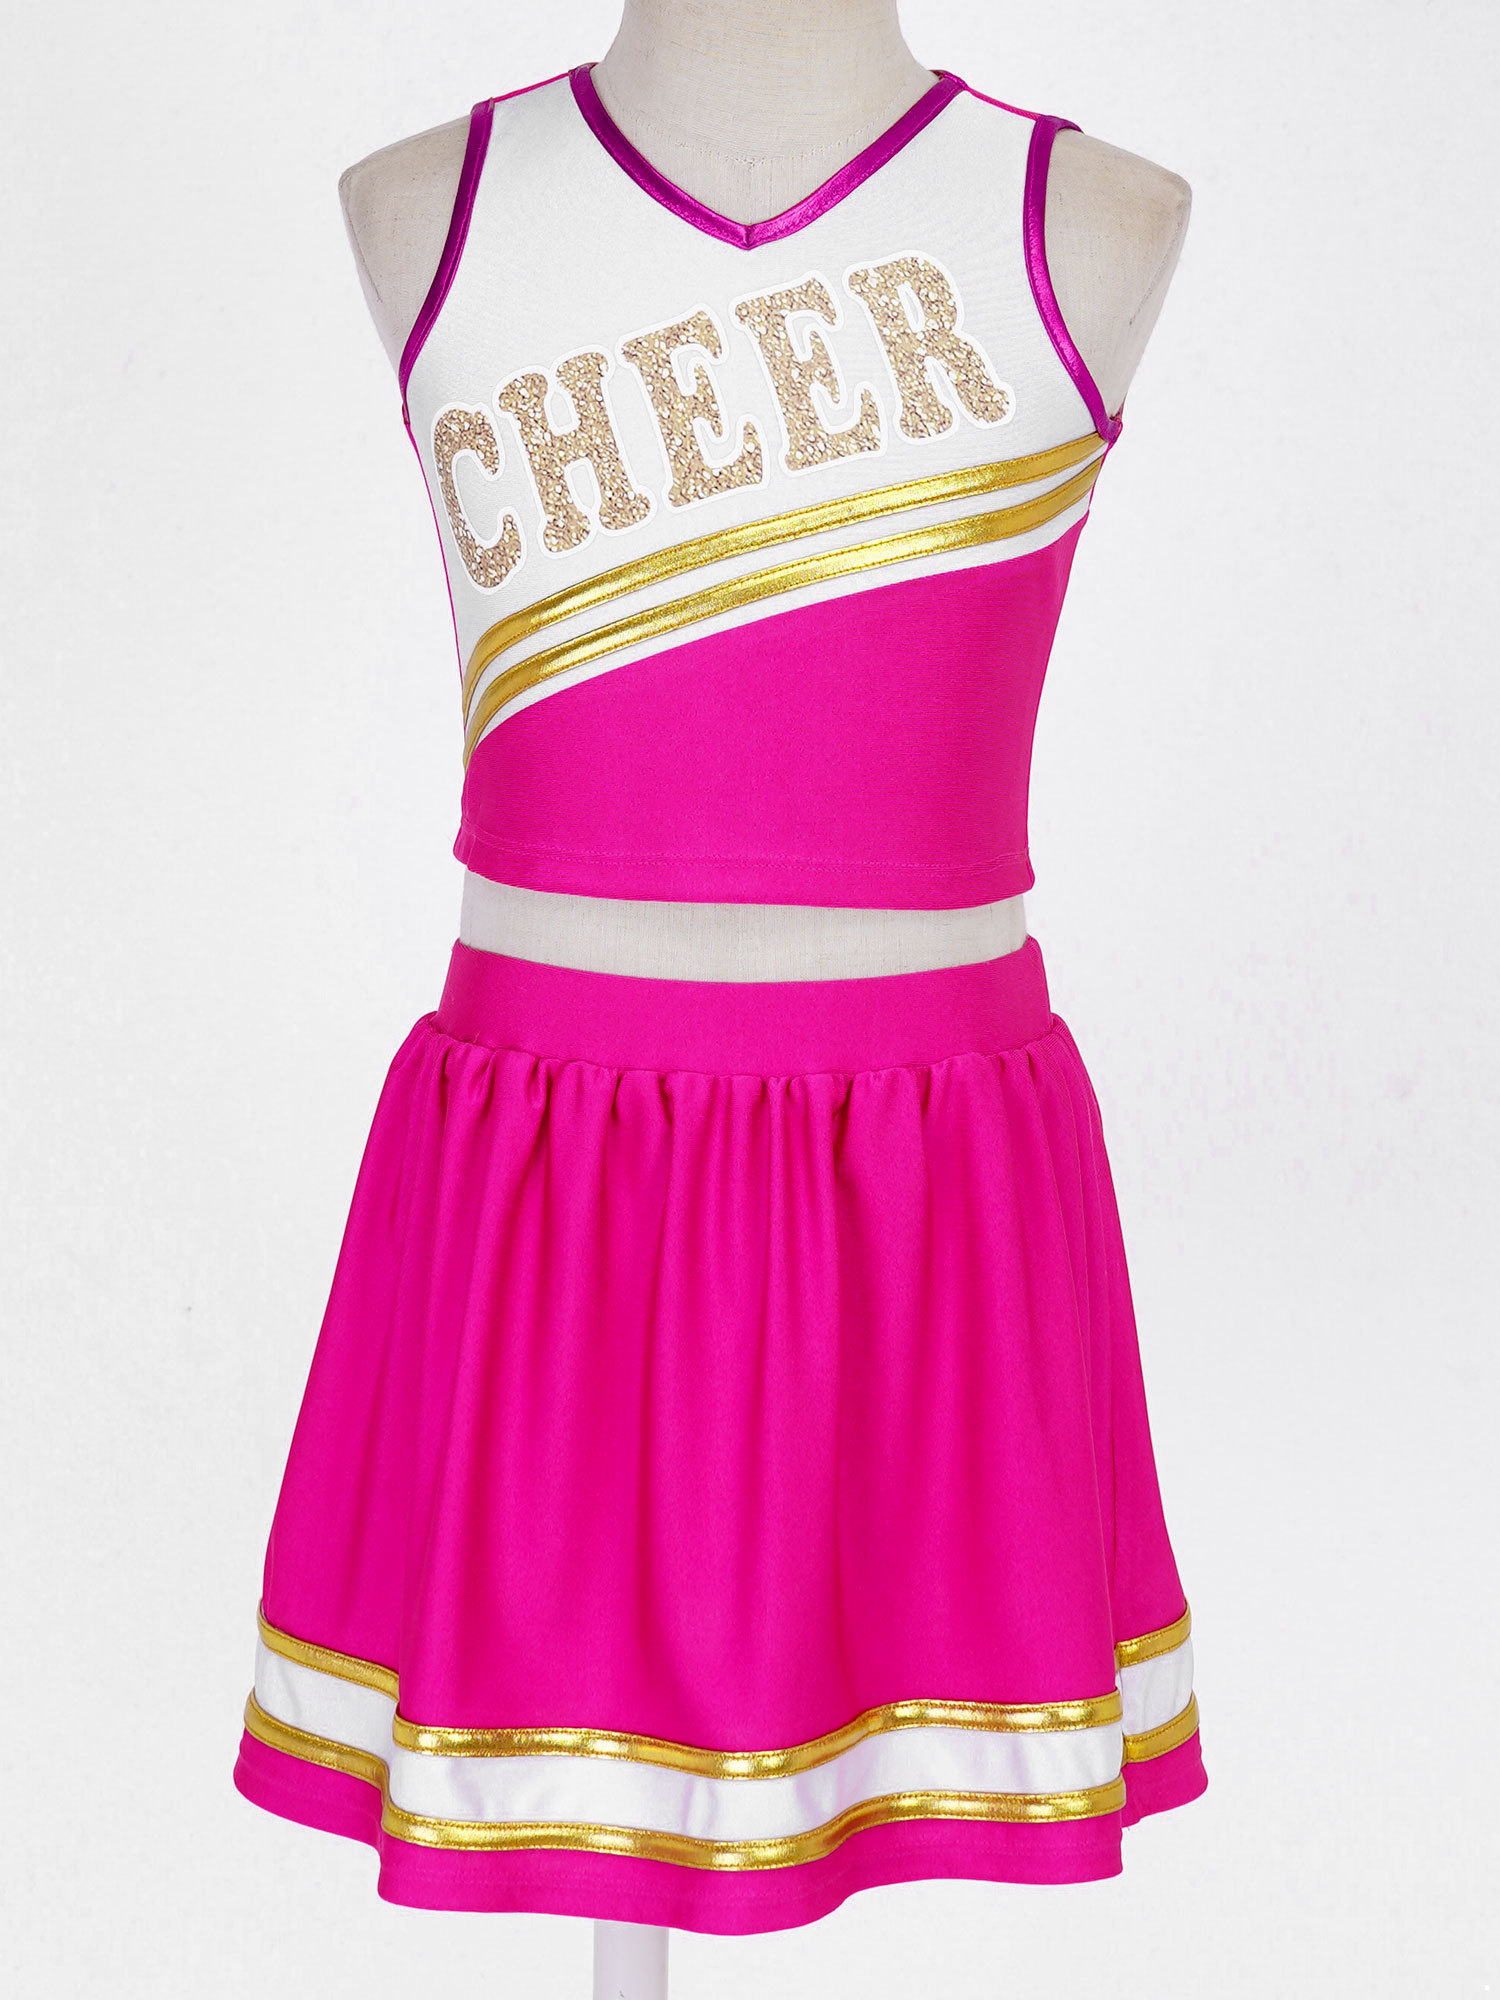 iEFiEL Kids Girls Patchwork Style Cheer Leading Dance Costume Uniform V ...